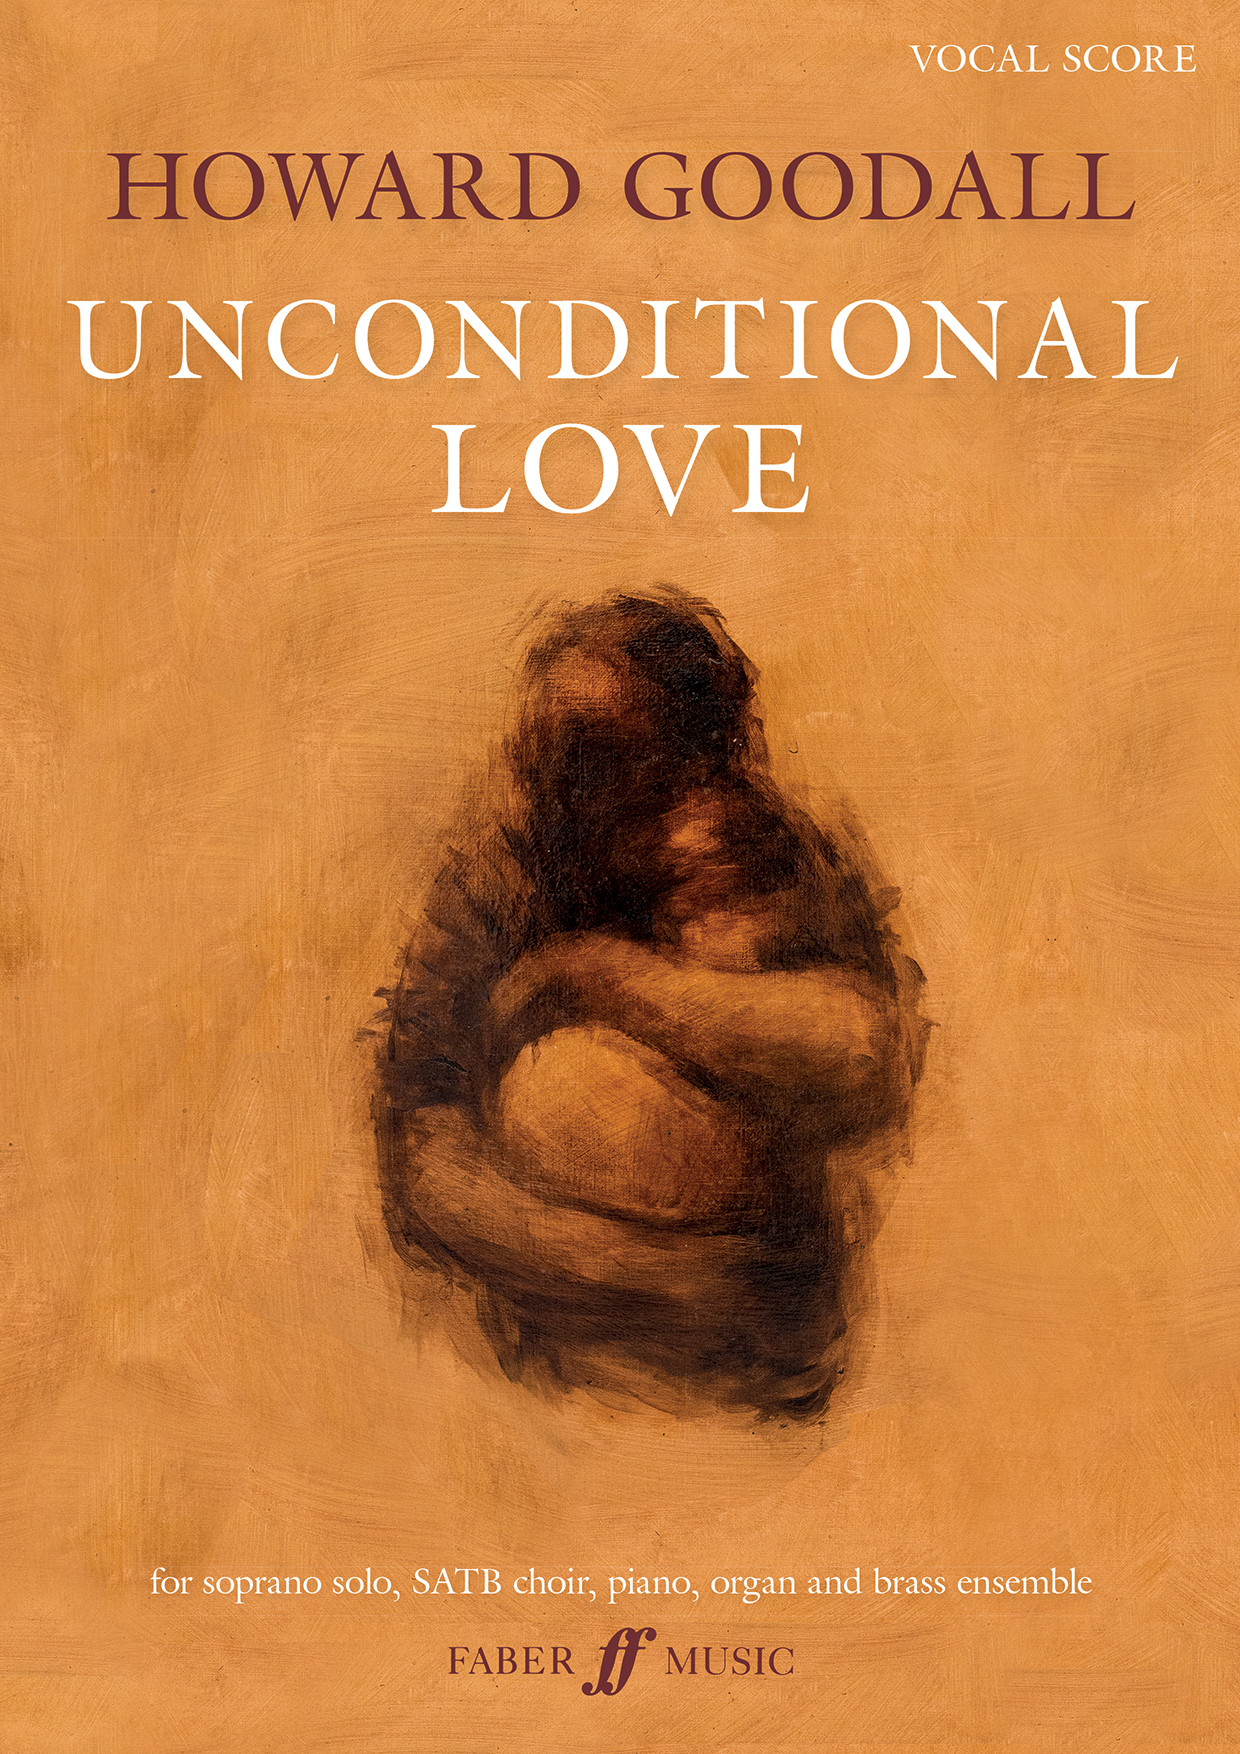 Goodall Unconditional Love Vocal Score Sheet Music